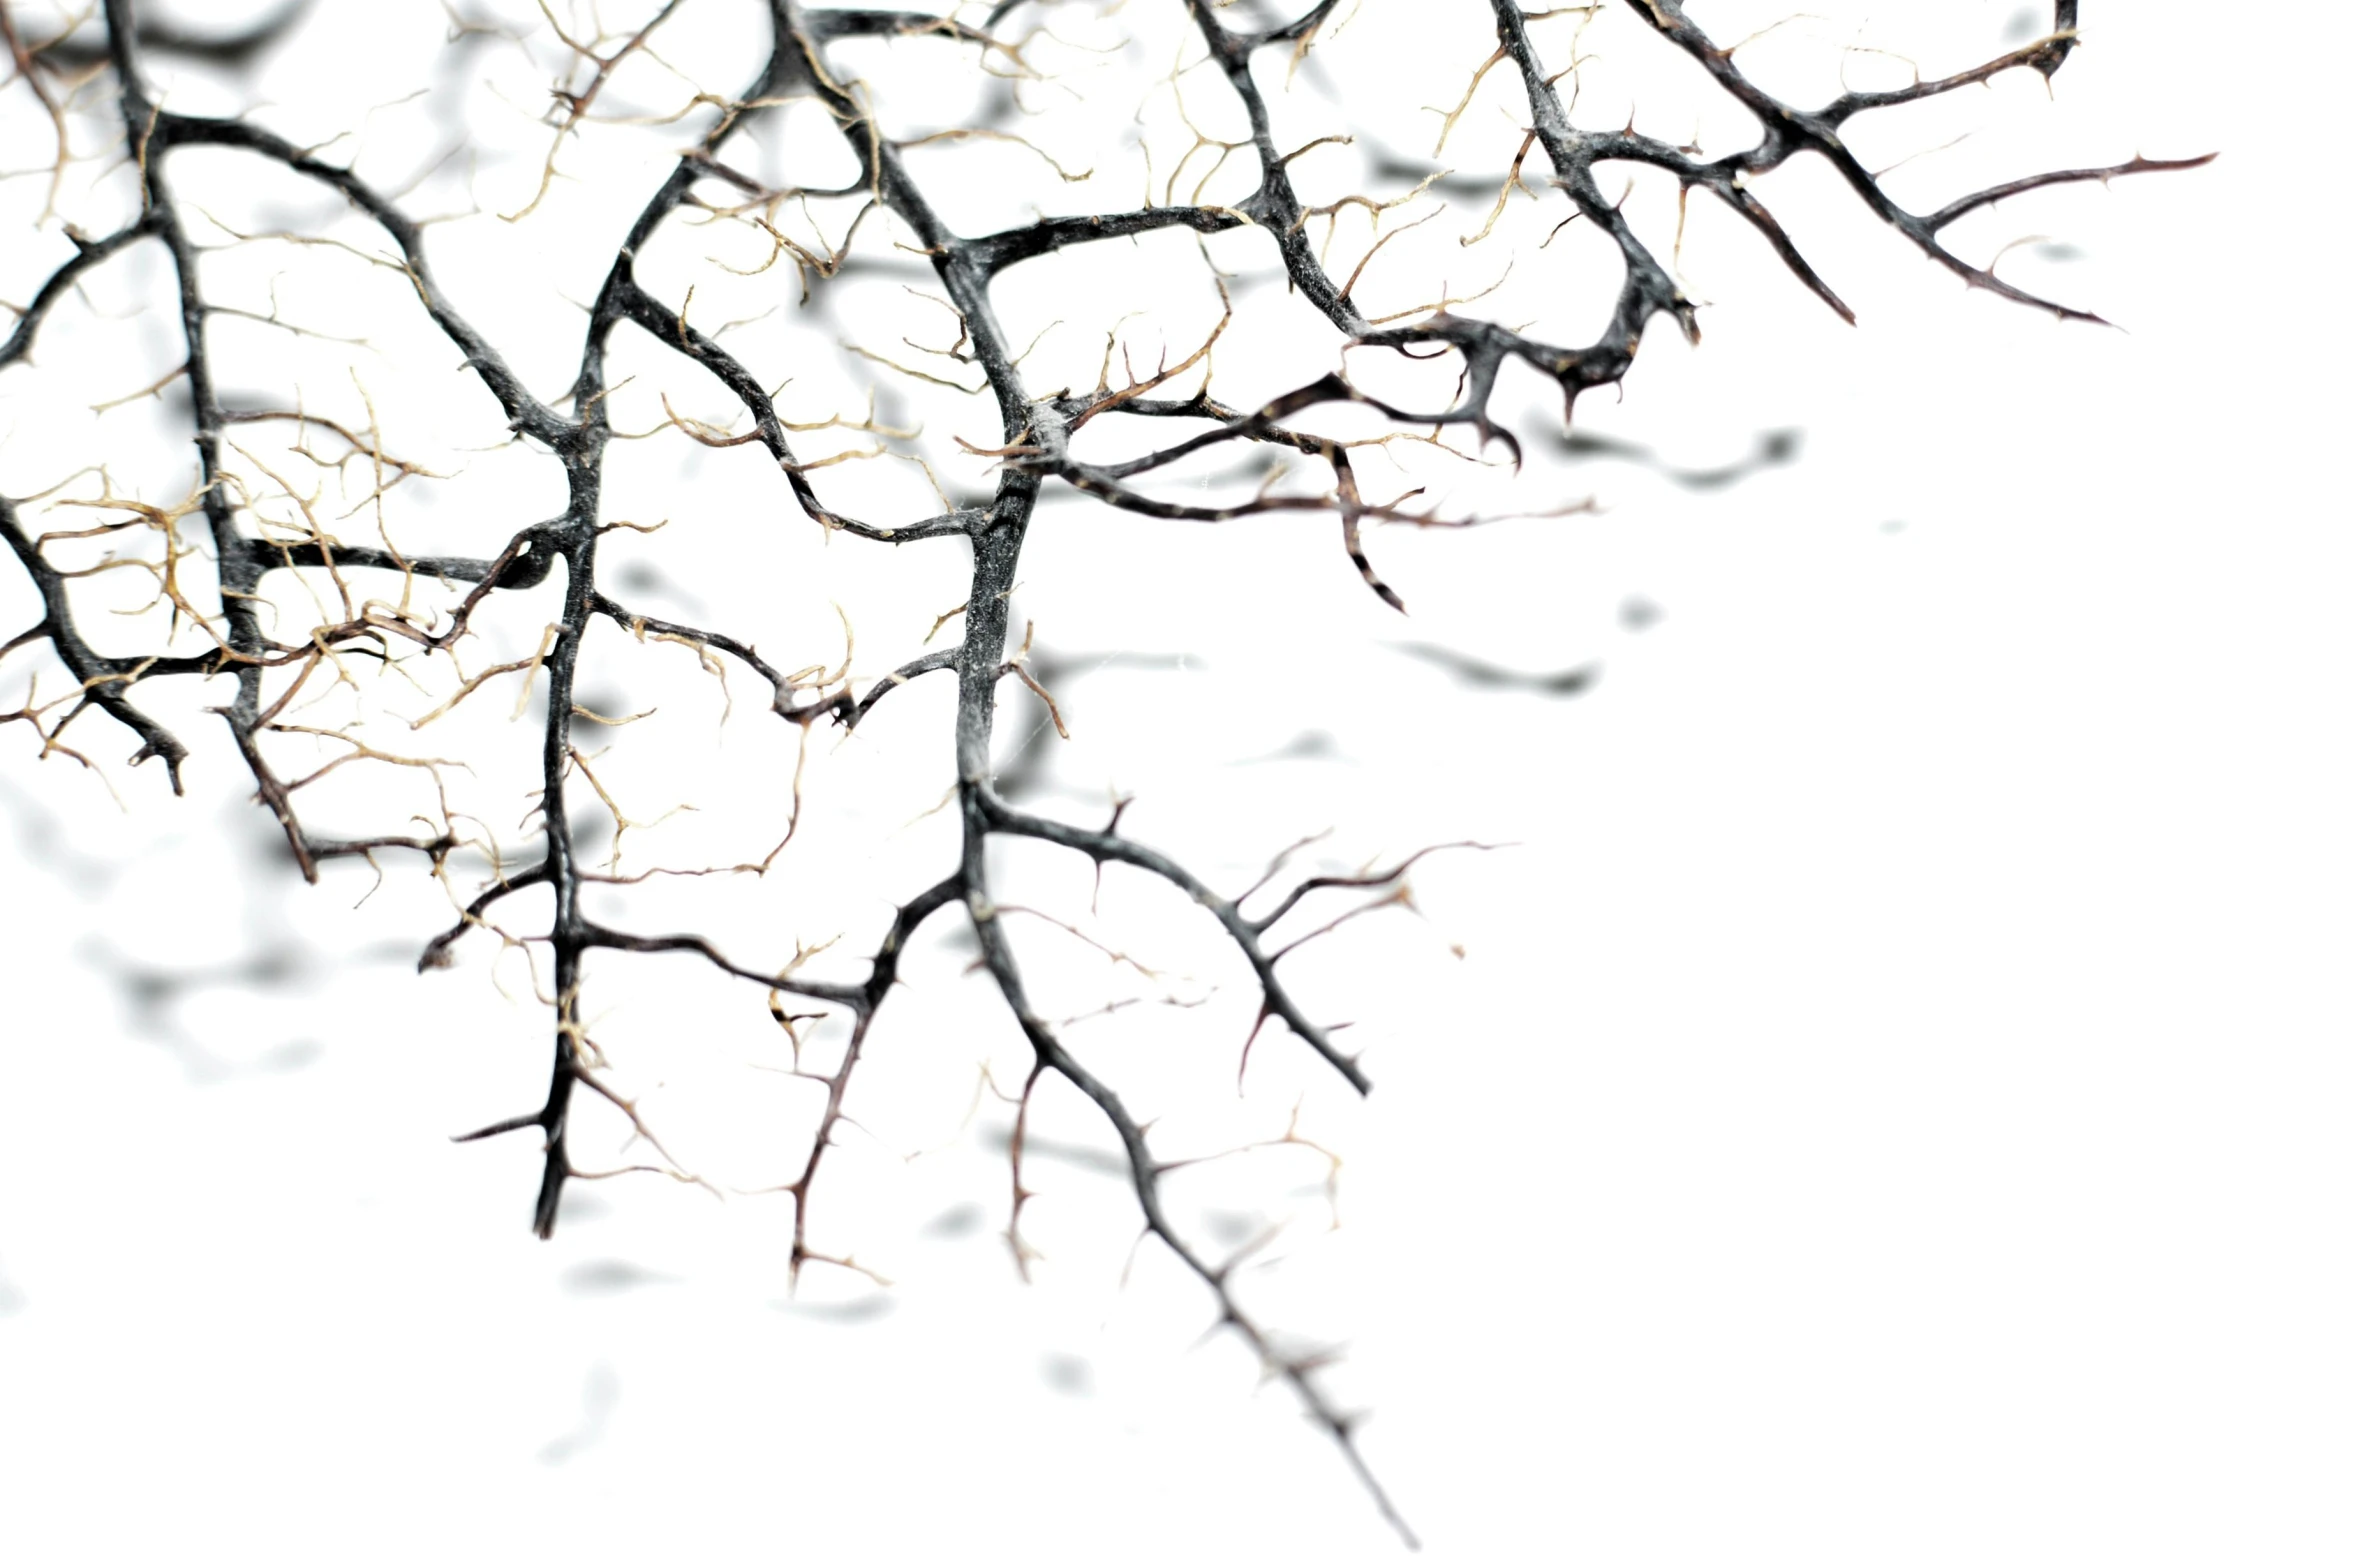 a bird sitting on top of a tree branch, an album cover, by Anna Füssli, generative art, skin detail, winter photograph, clear detailed view, black tendrils